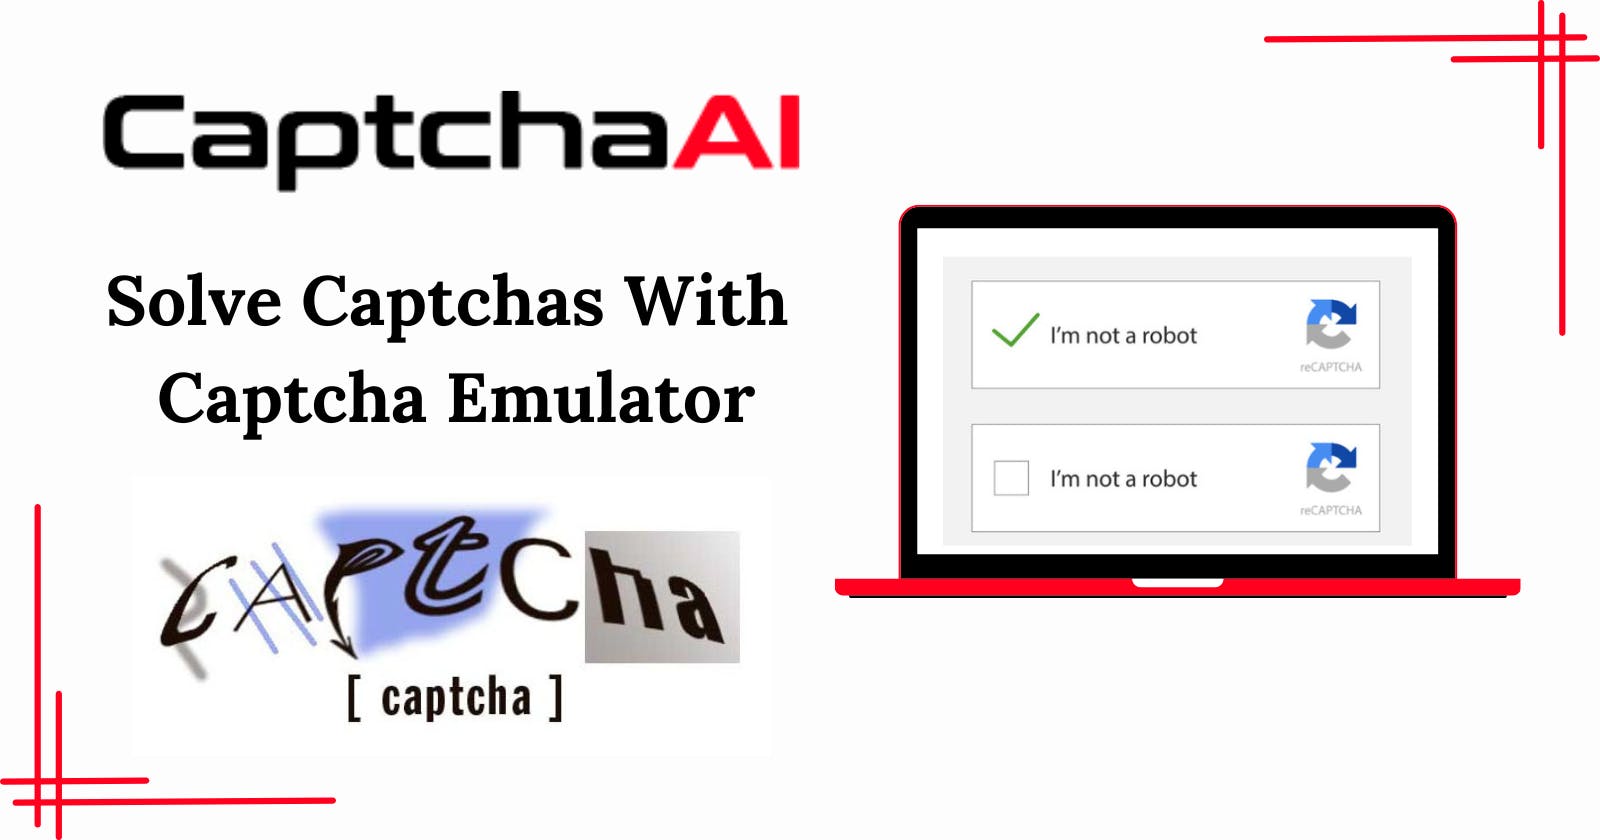 How to solve Captchas with Captcha Emulator?